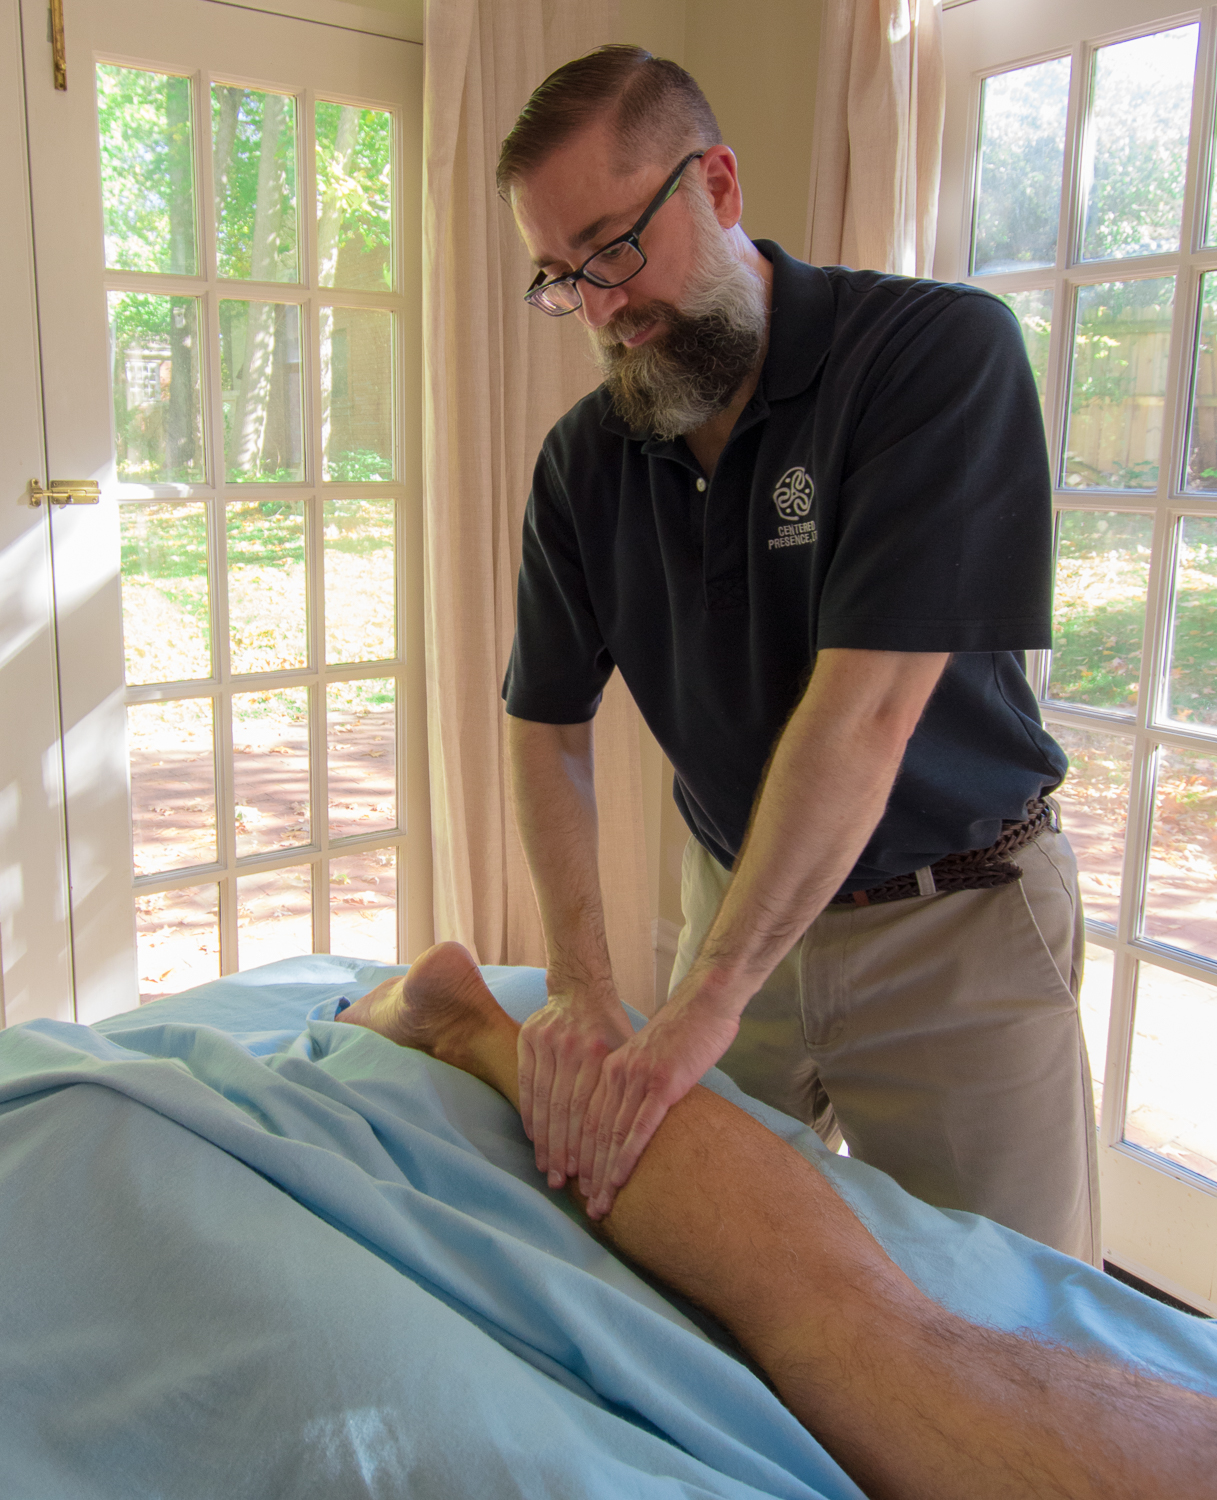 ON-SIte Massage - Centered Presence, LTD